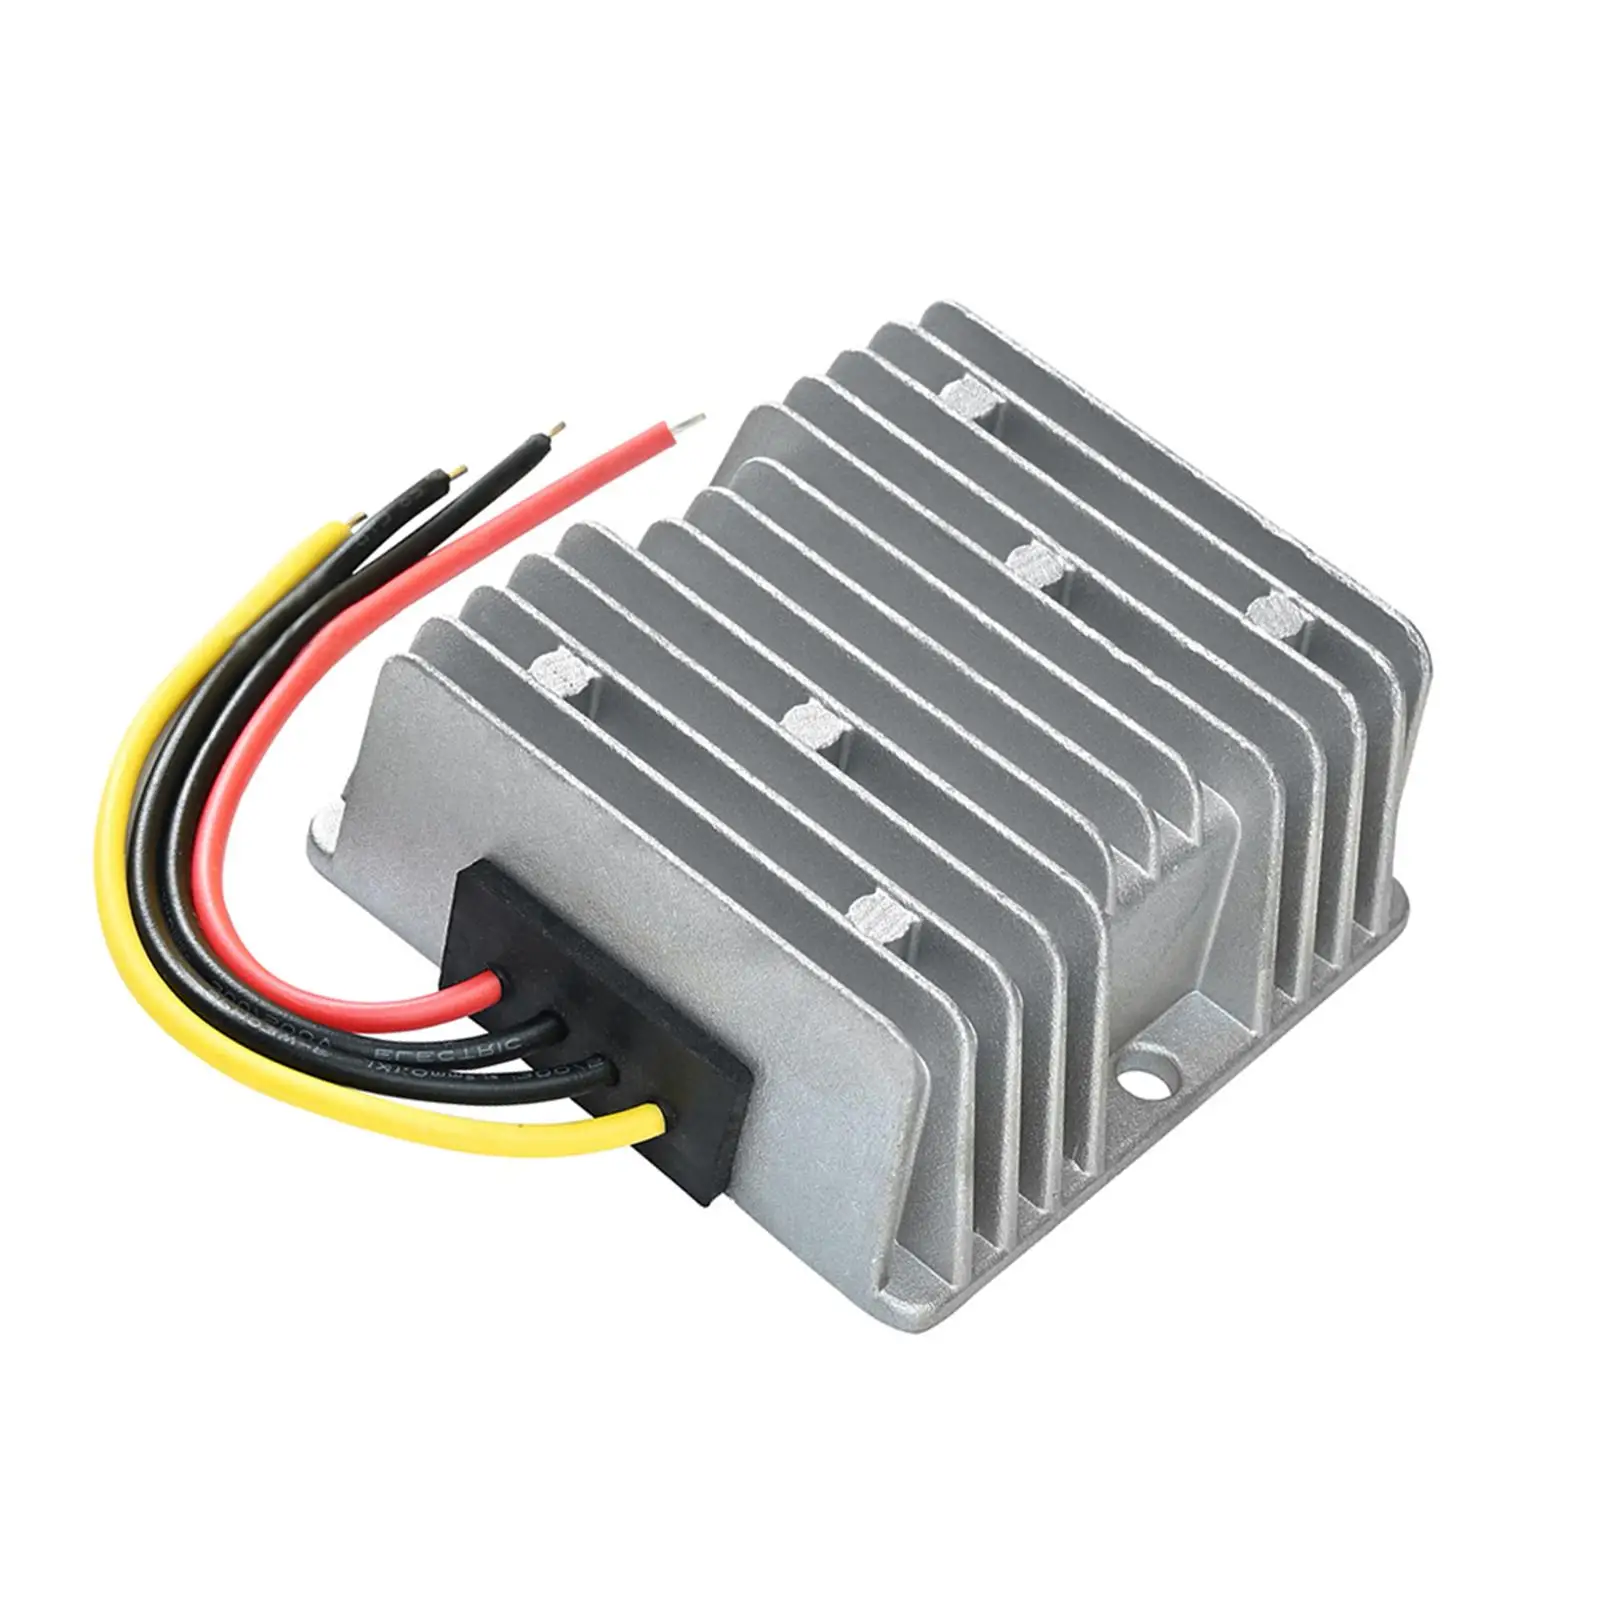 Converter IP68 Waterproof Voltage Regulator Module for Audio Car Cart